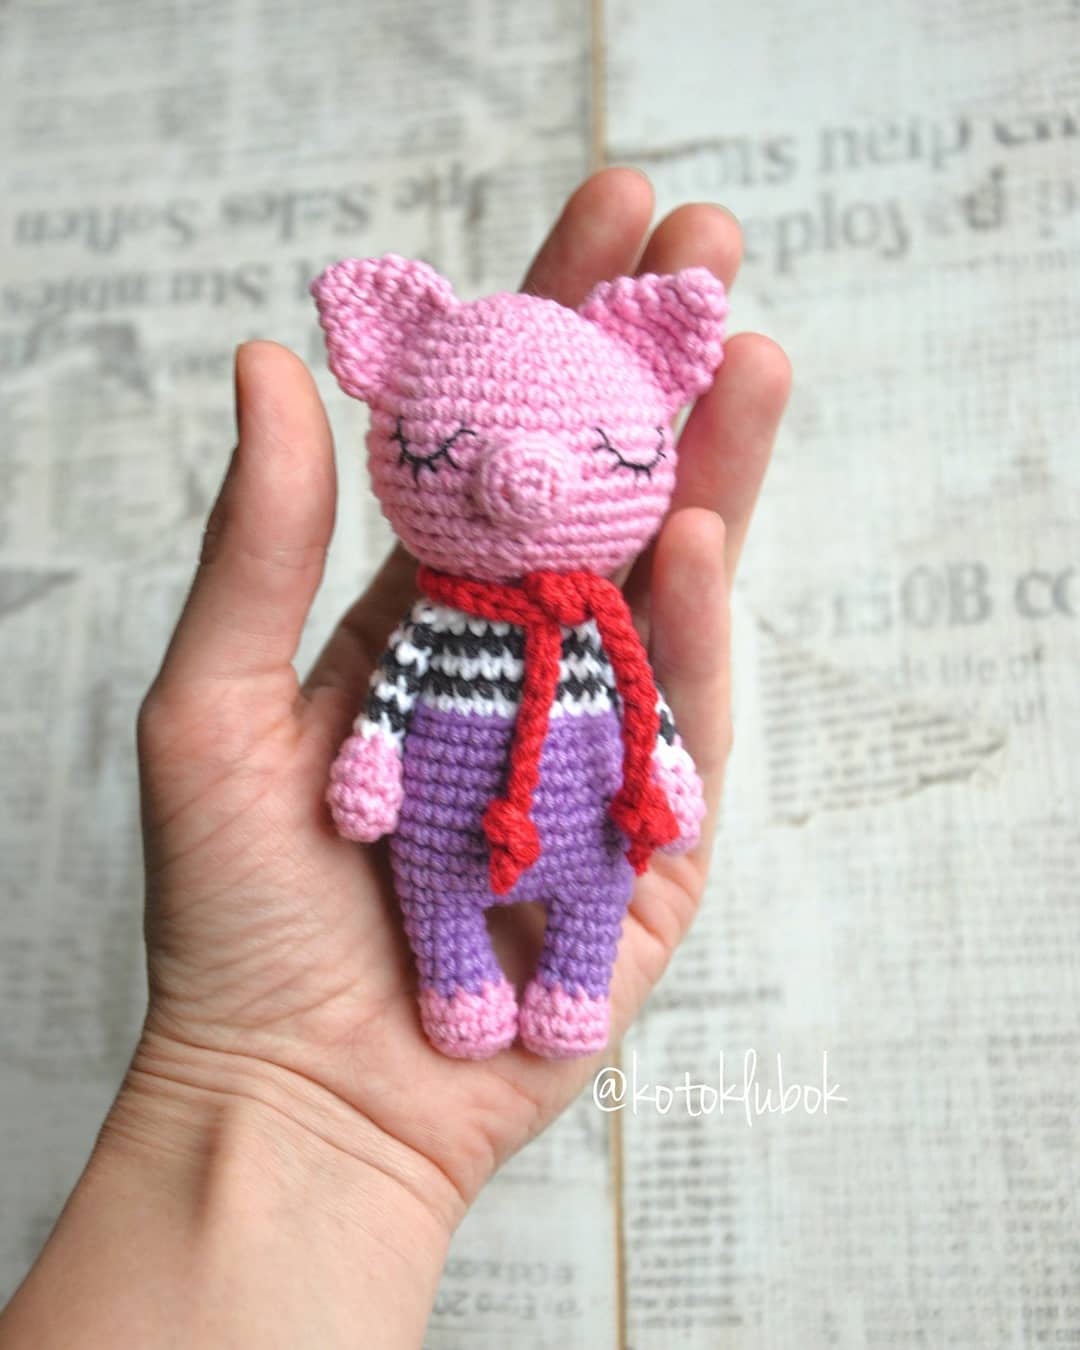 Crochet pig amigurumi